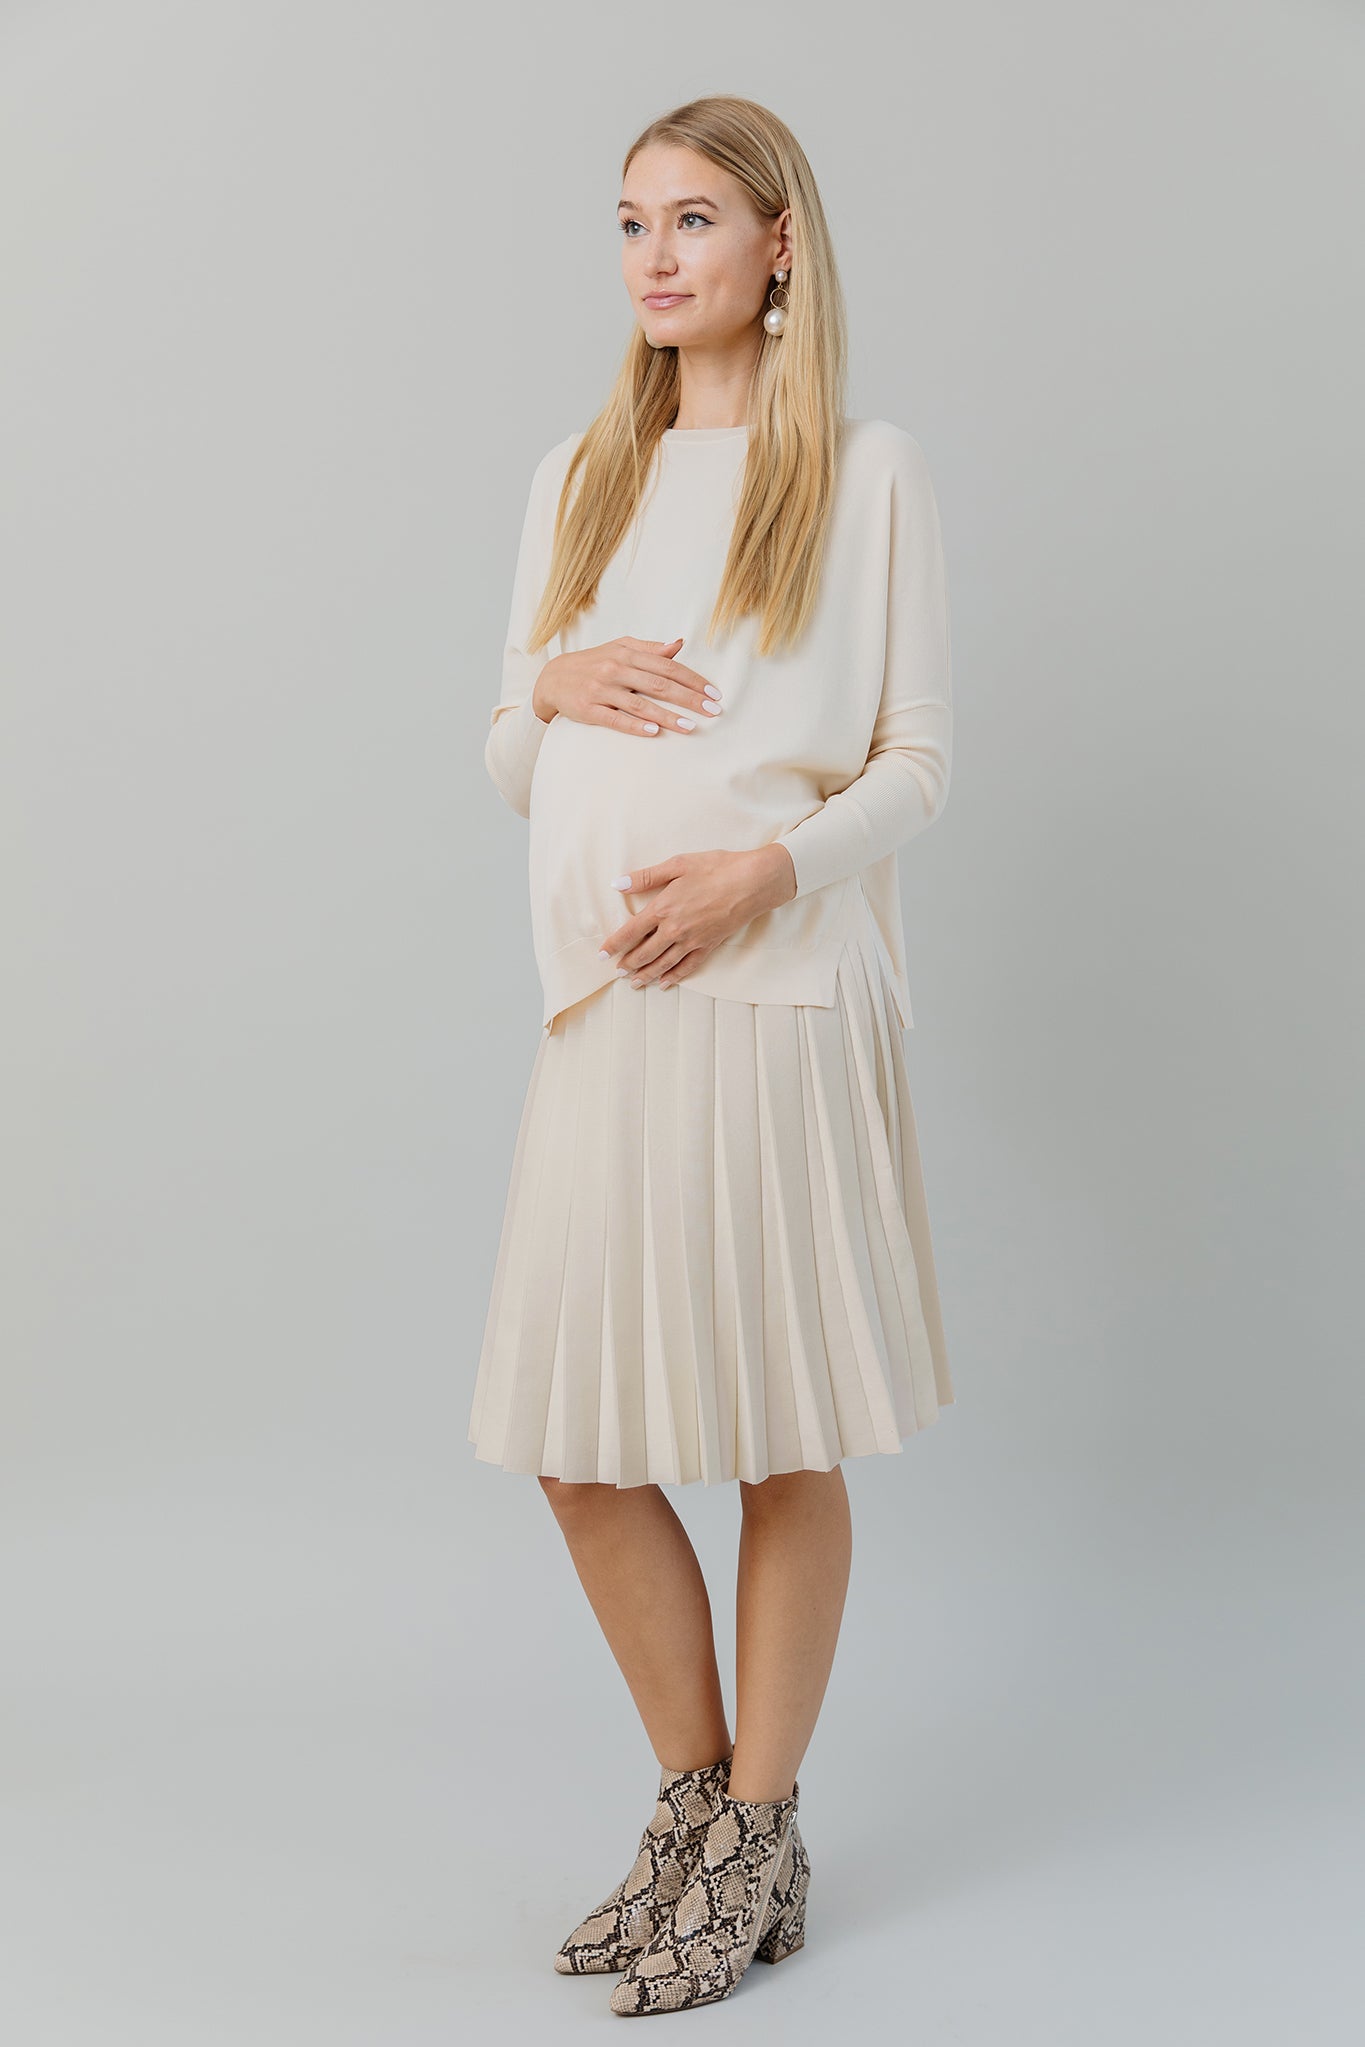 The Maternity Infinity Skirt in Vanilla